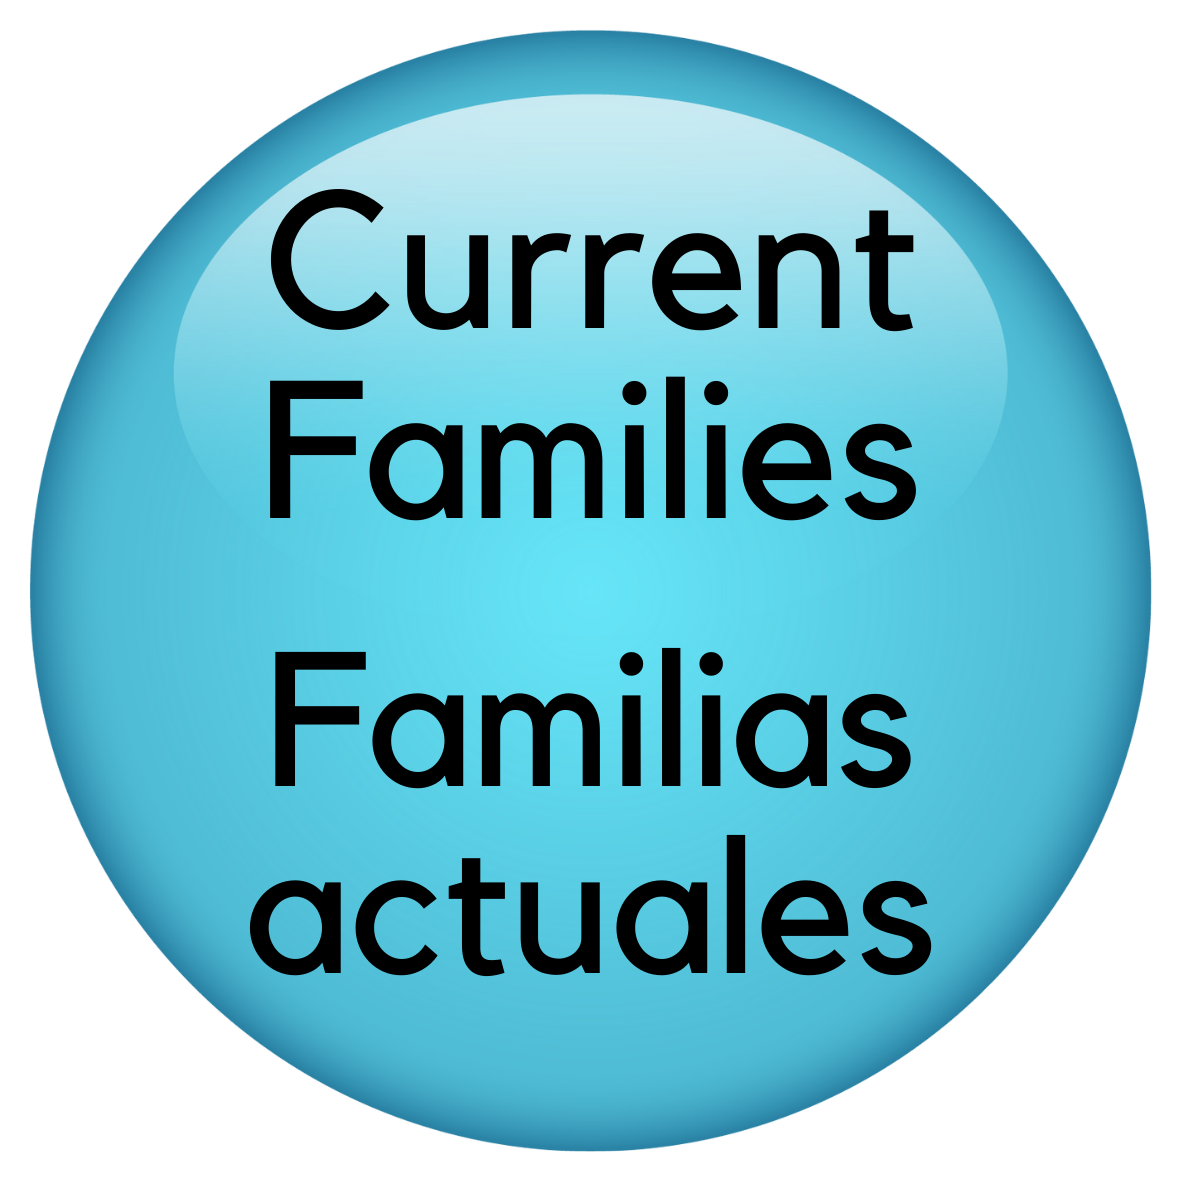 Current families button